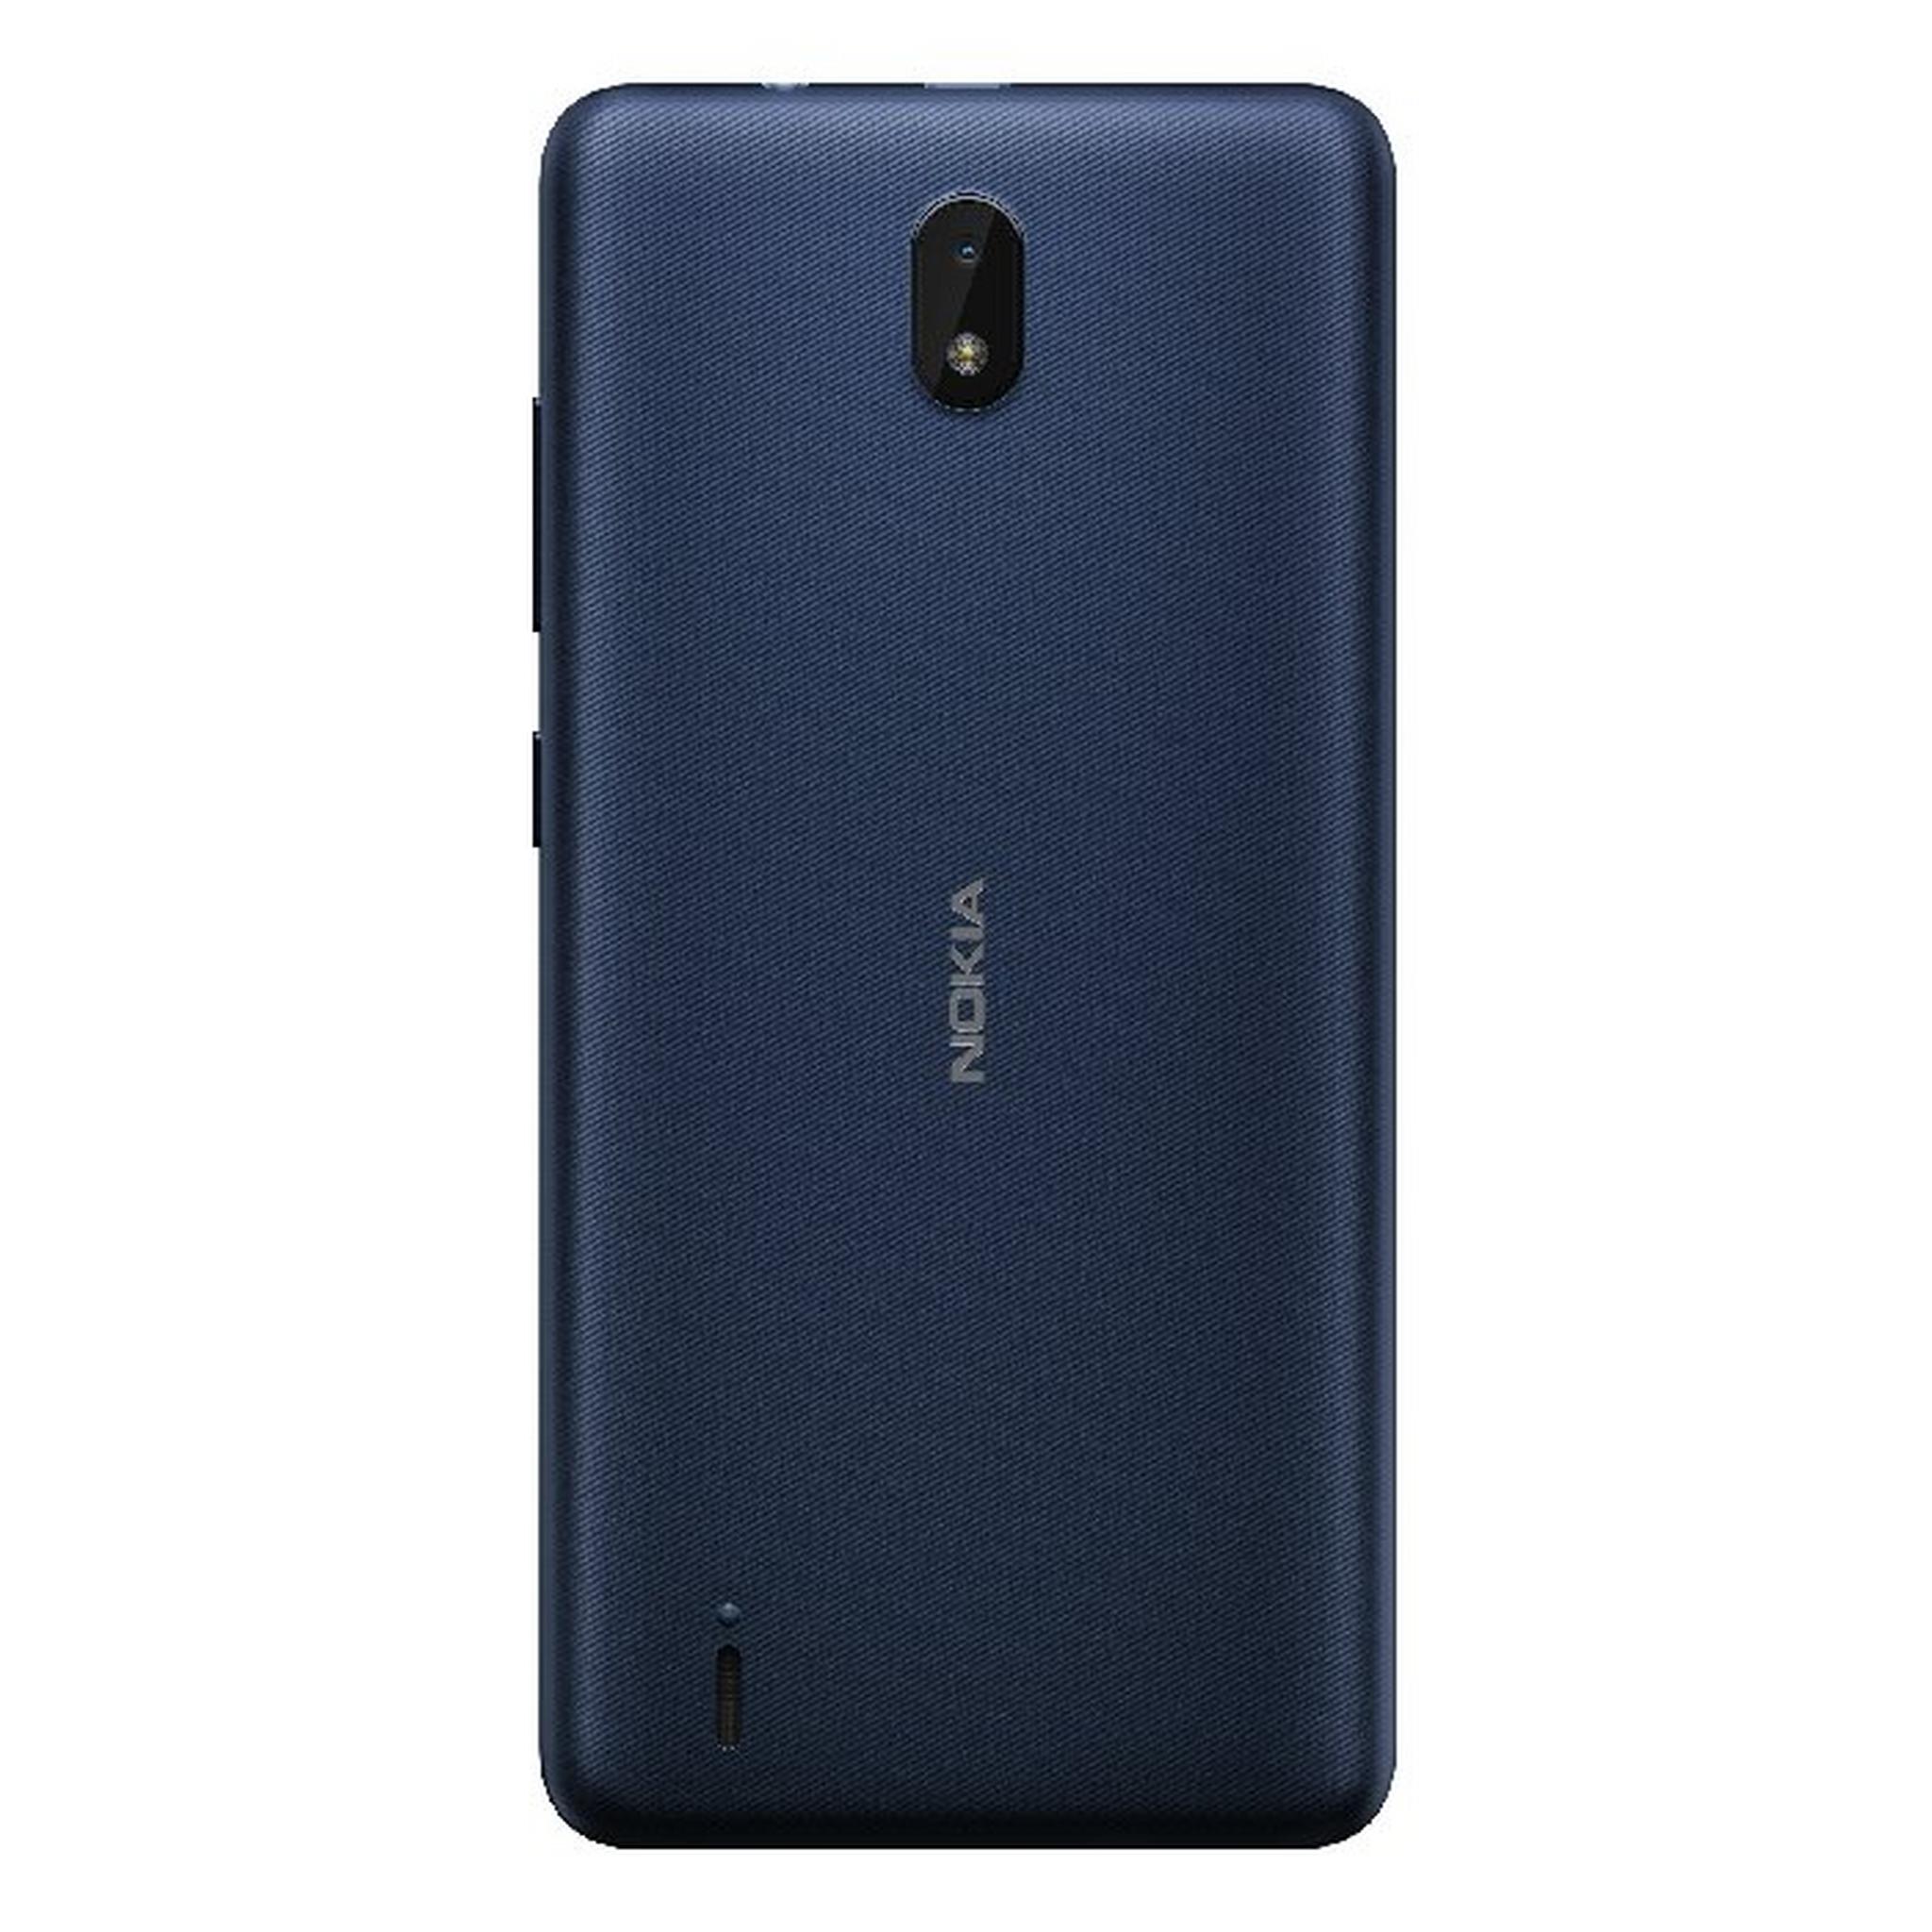 Nokia C1 SE16 GB Dual Sim Phone - Blue